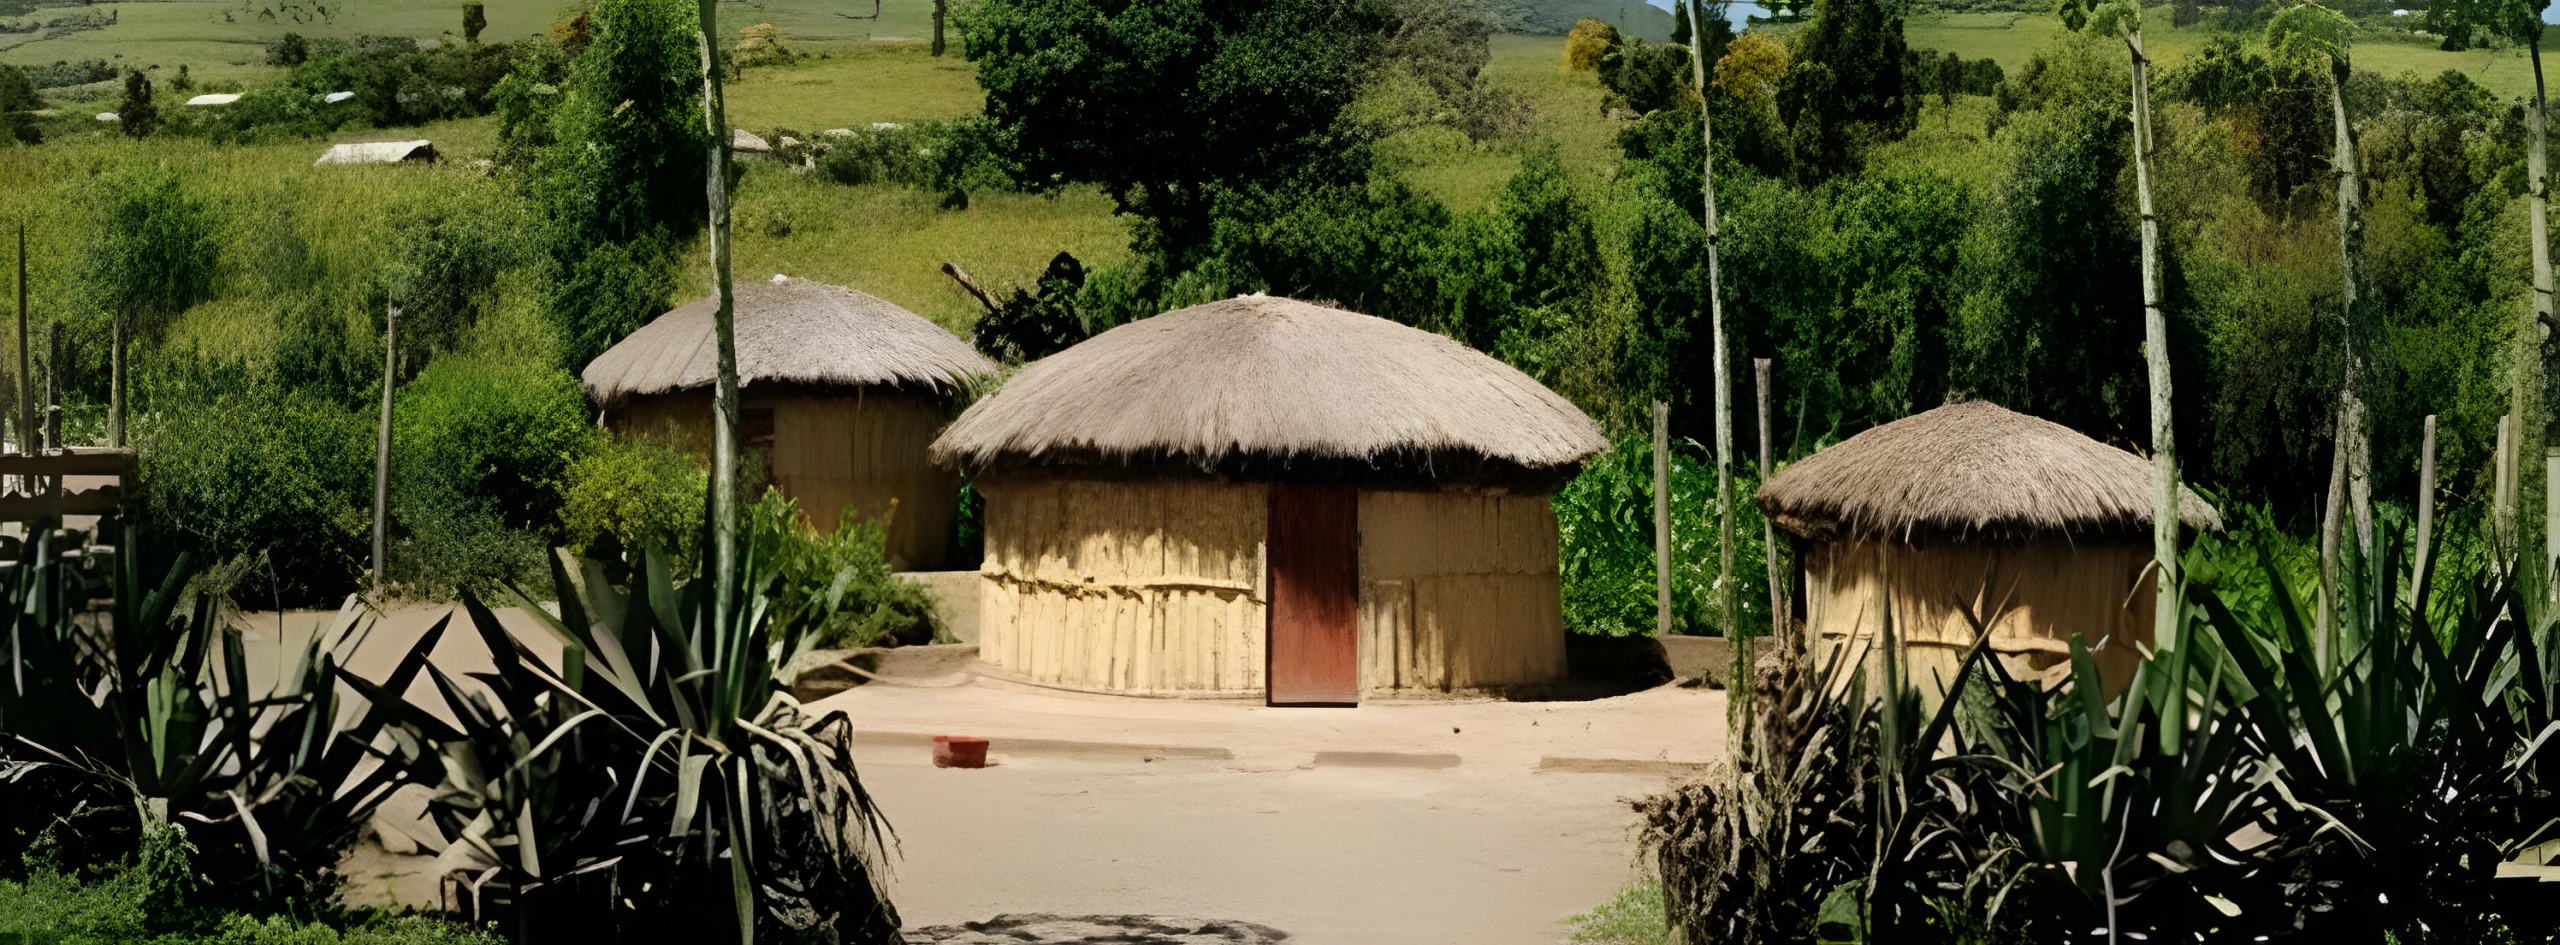 Arusha – Ng’iresi Village of Waarusha tribe